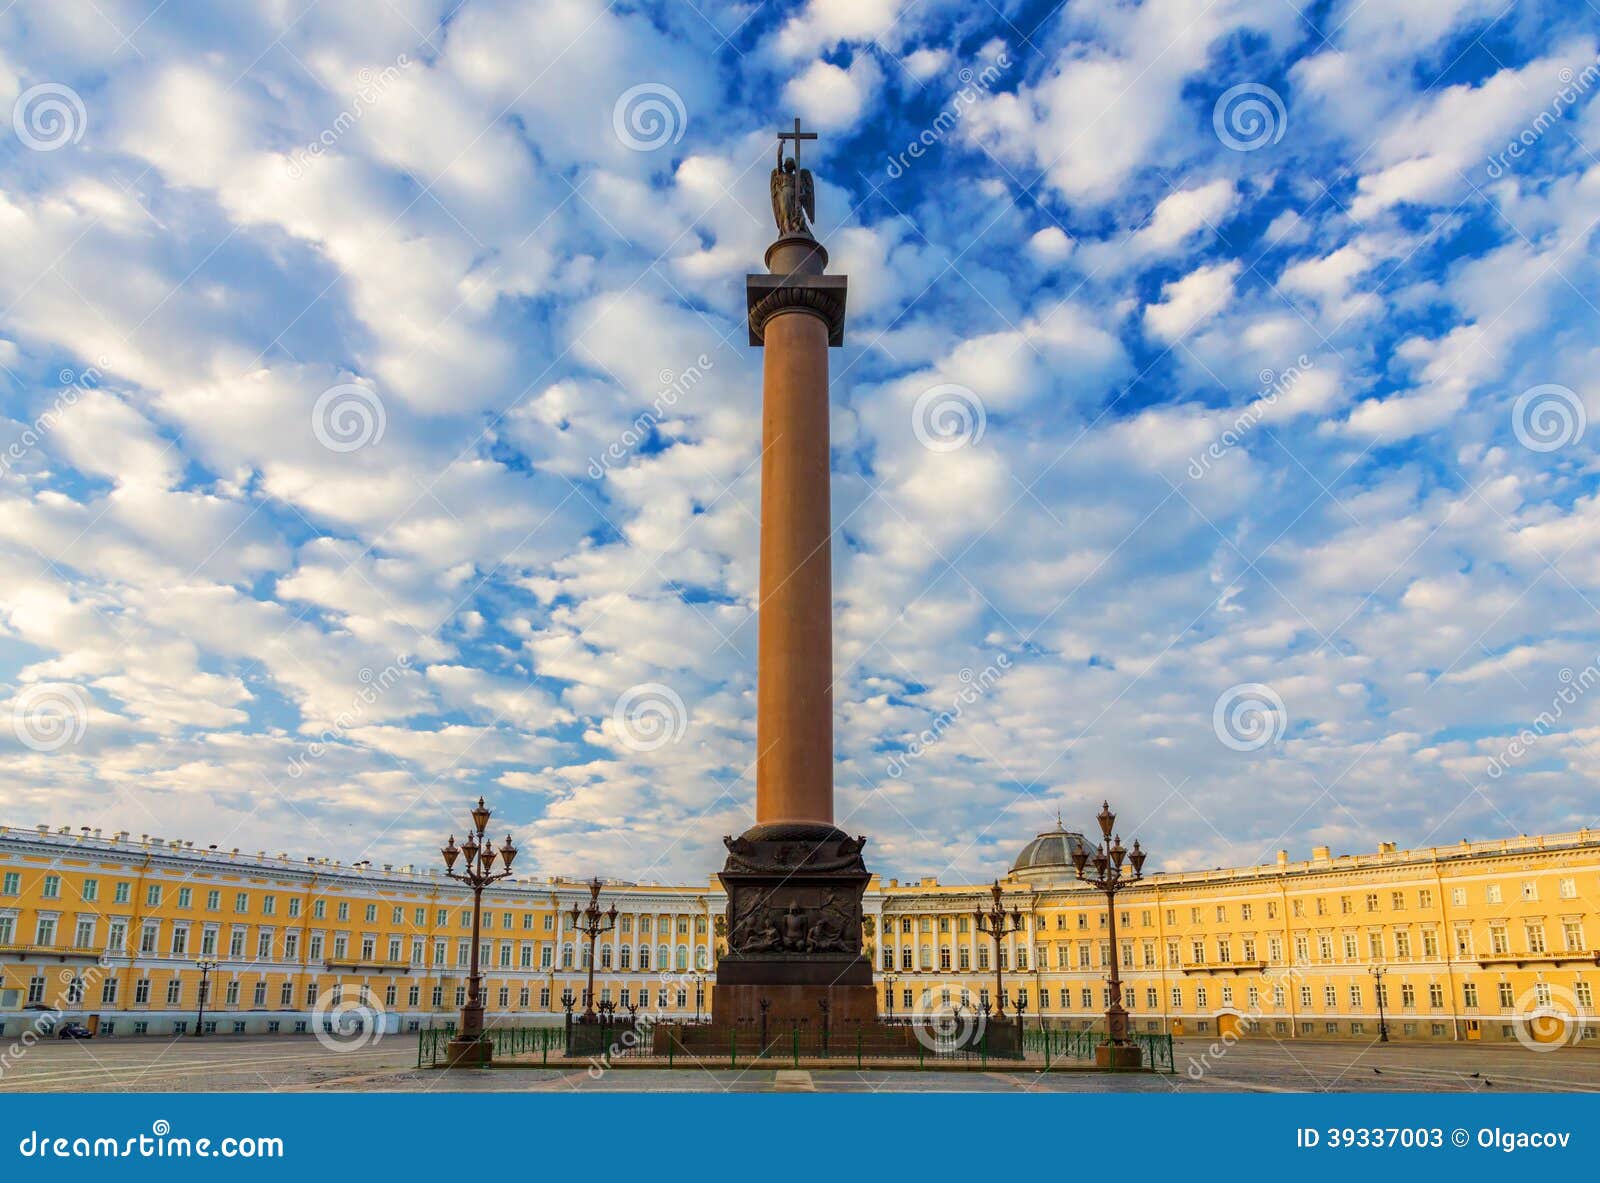 palace square saint-petersburg, russia